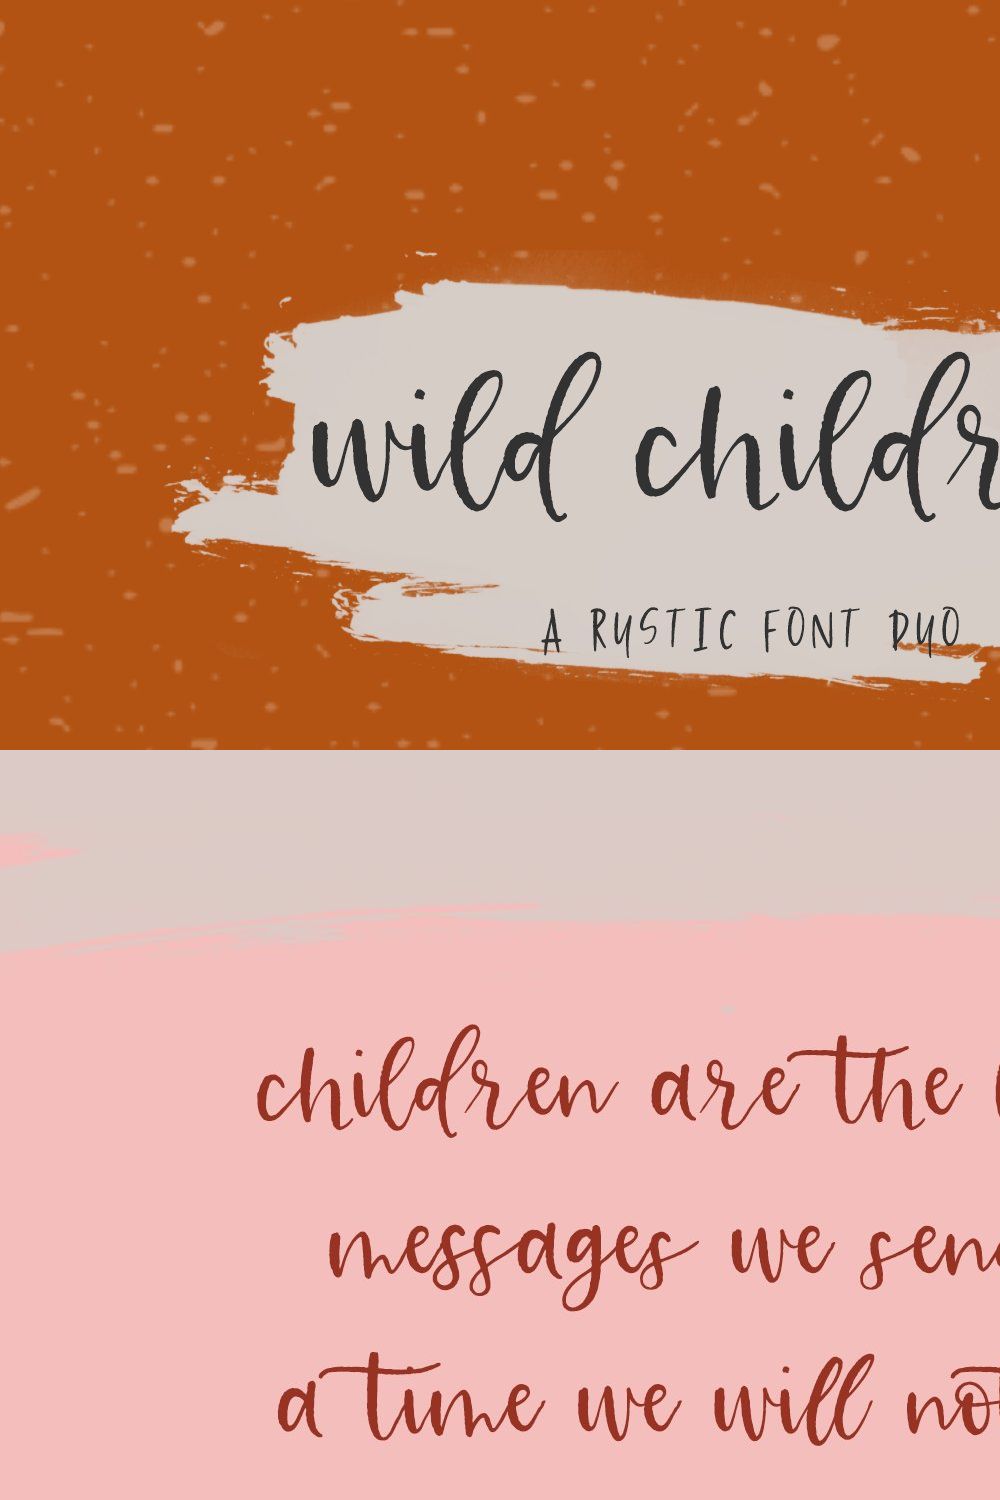 Wild Children Rustic Font Duo pinterest preview image.